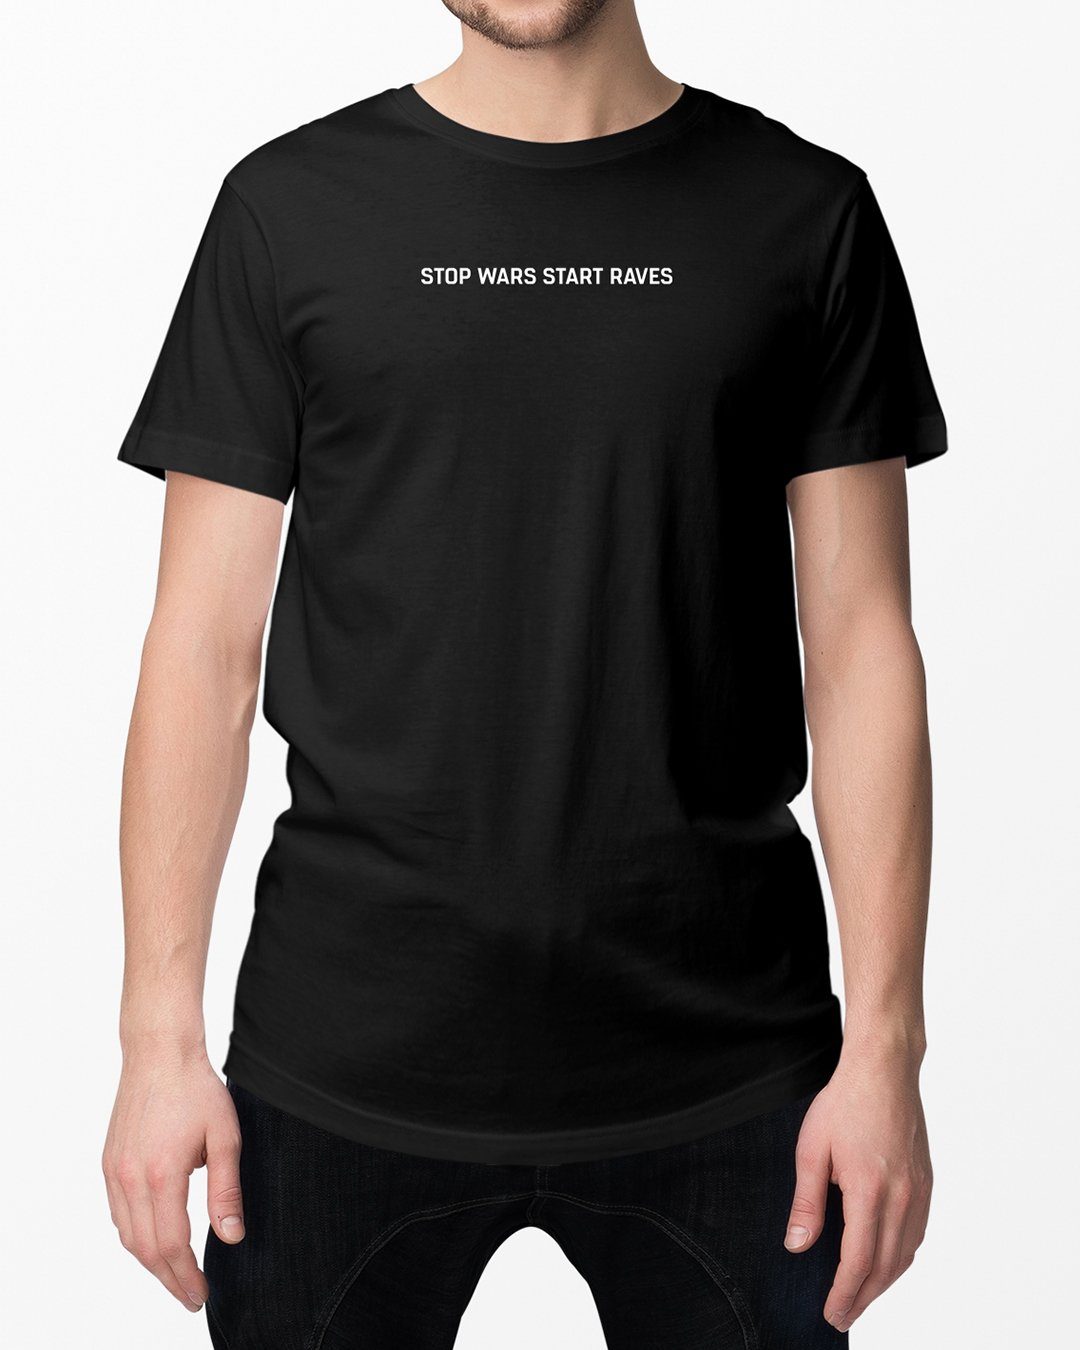 Stop Wars Start Raves Shirt | RAVE Clothing Online Shop